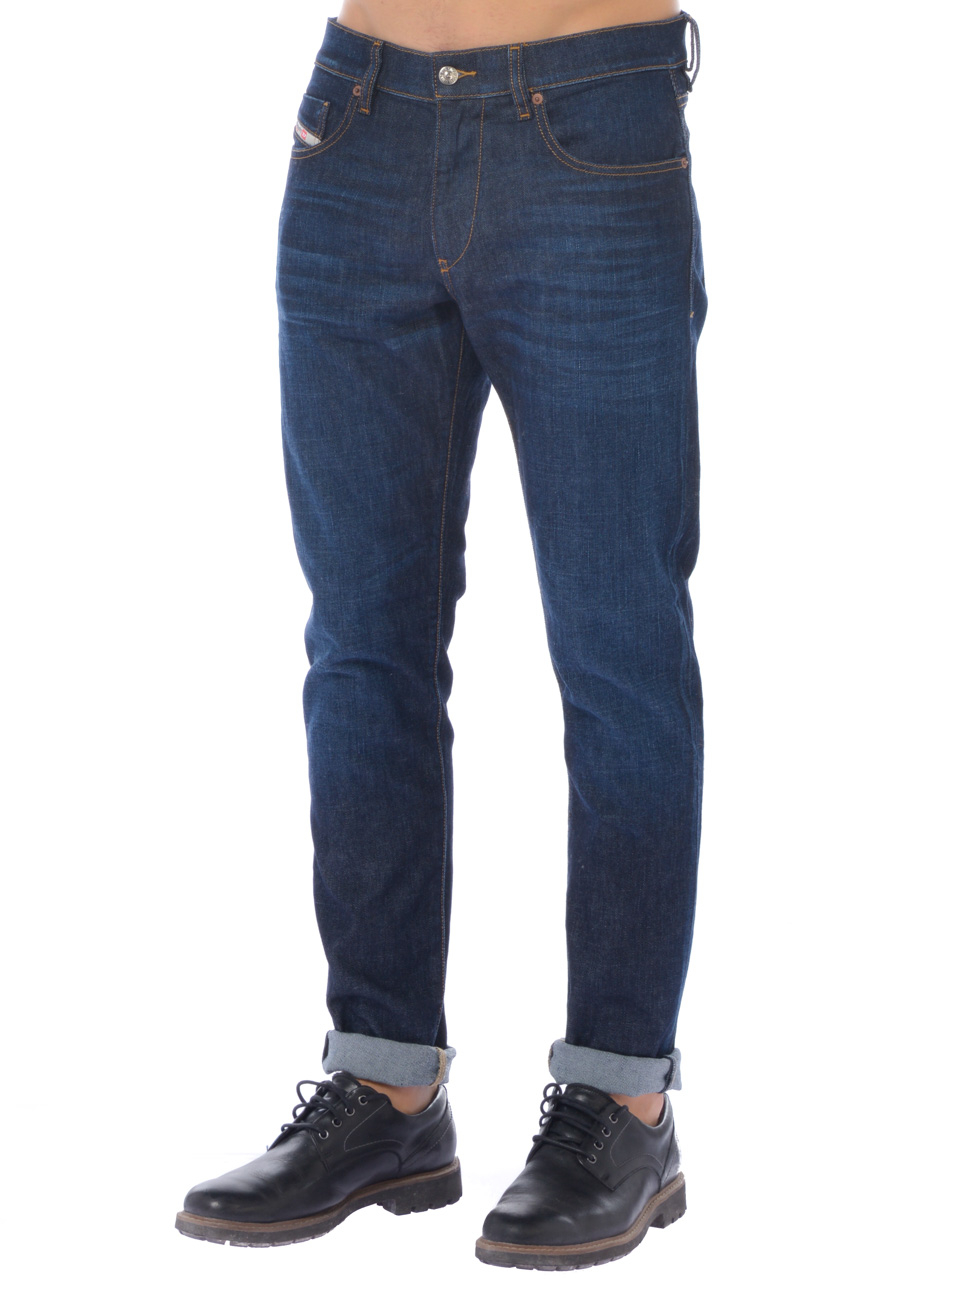 jeans da uomo Diesel cinque tasche cuciture in contrasto